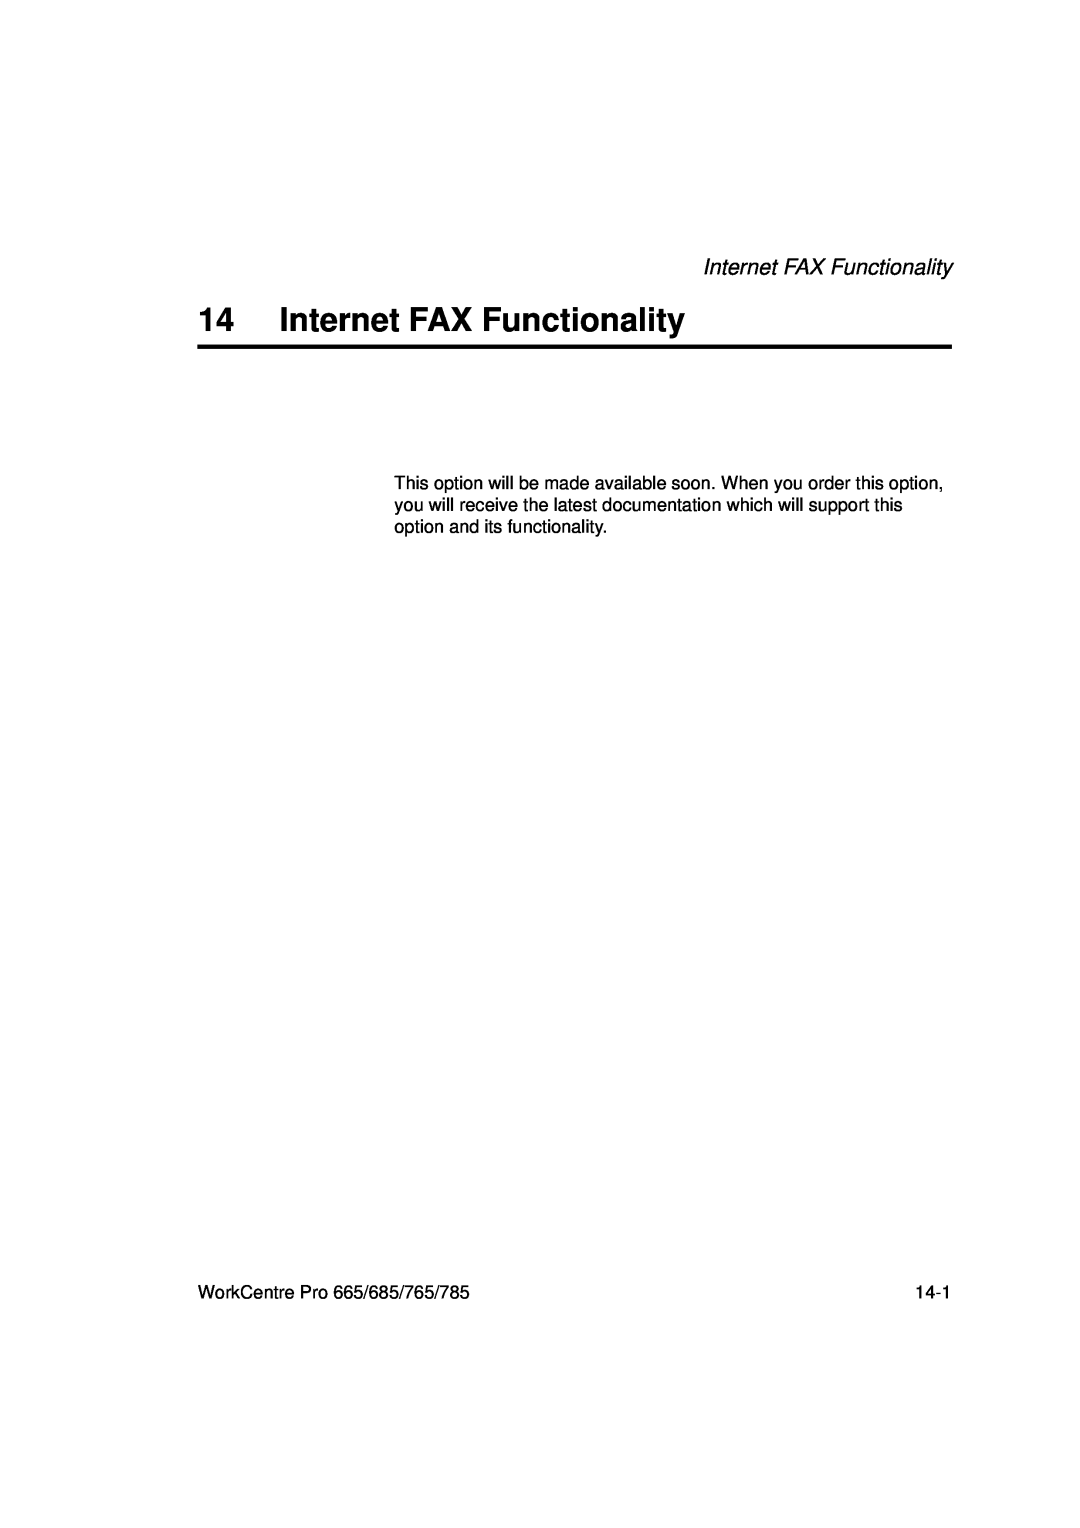 Xerox 785, 765, 665, 685 manual Internet FAX Functionality 